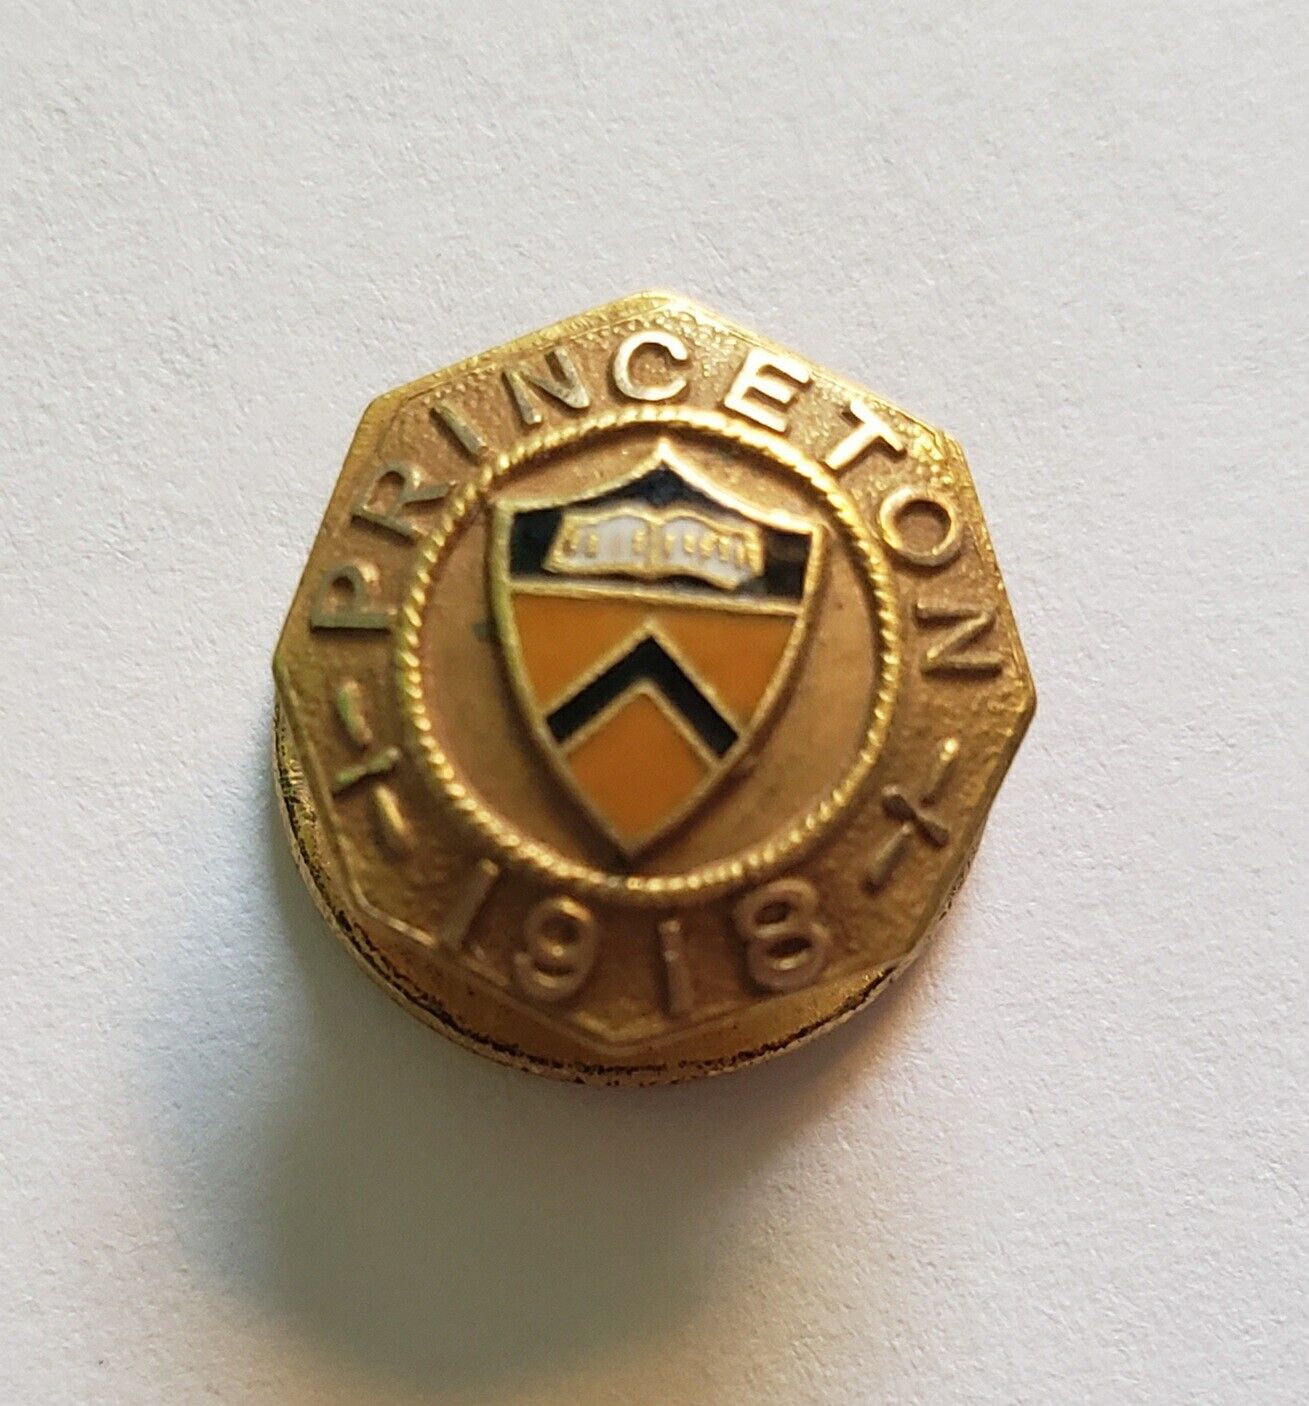 ANTIQUE 14K GOLD 1918 PRINCETON UNIVERSITY LAPEL BUTTON Rare Collectible